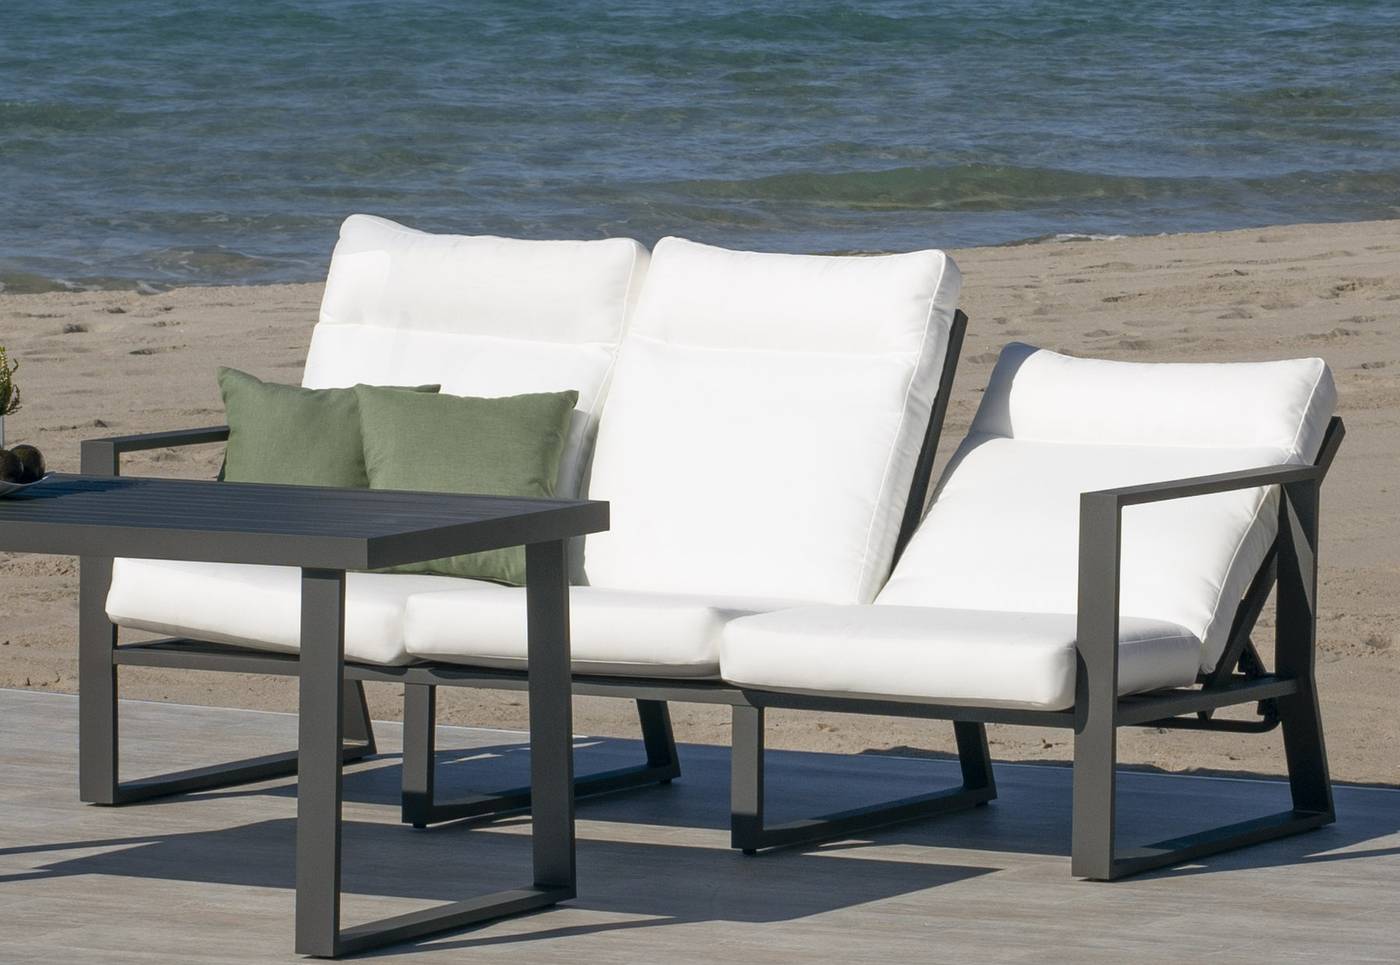 Set Aluminio Bolonia-750 - Conjunto aluminio: sofá 3 plazas + 2 sillones + mesa de comedor + 2 taburetes + cojines. Respaldos reclinables. Colores: blanco, antracita o bronce.